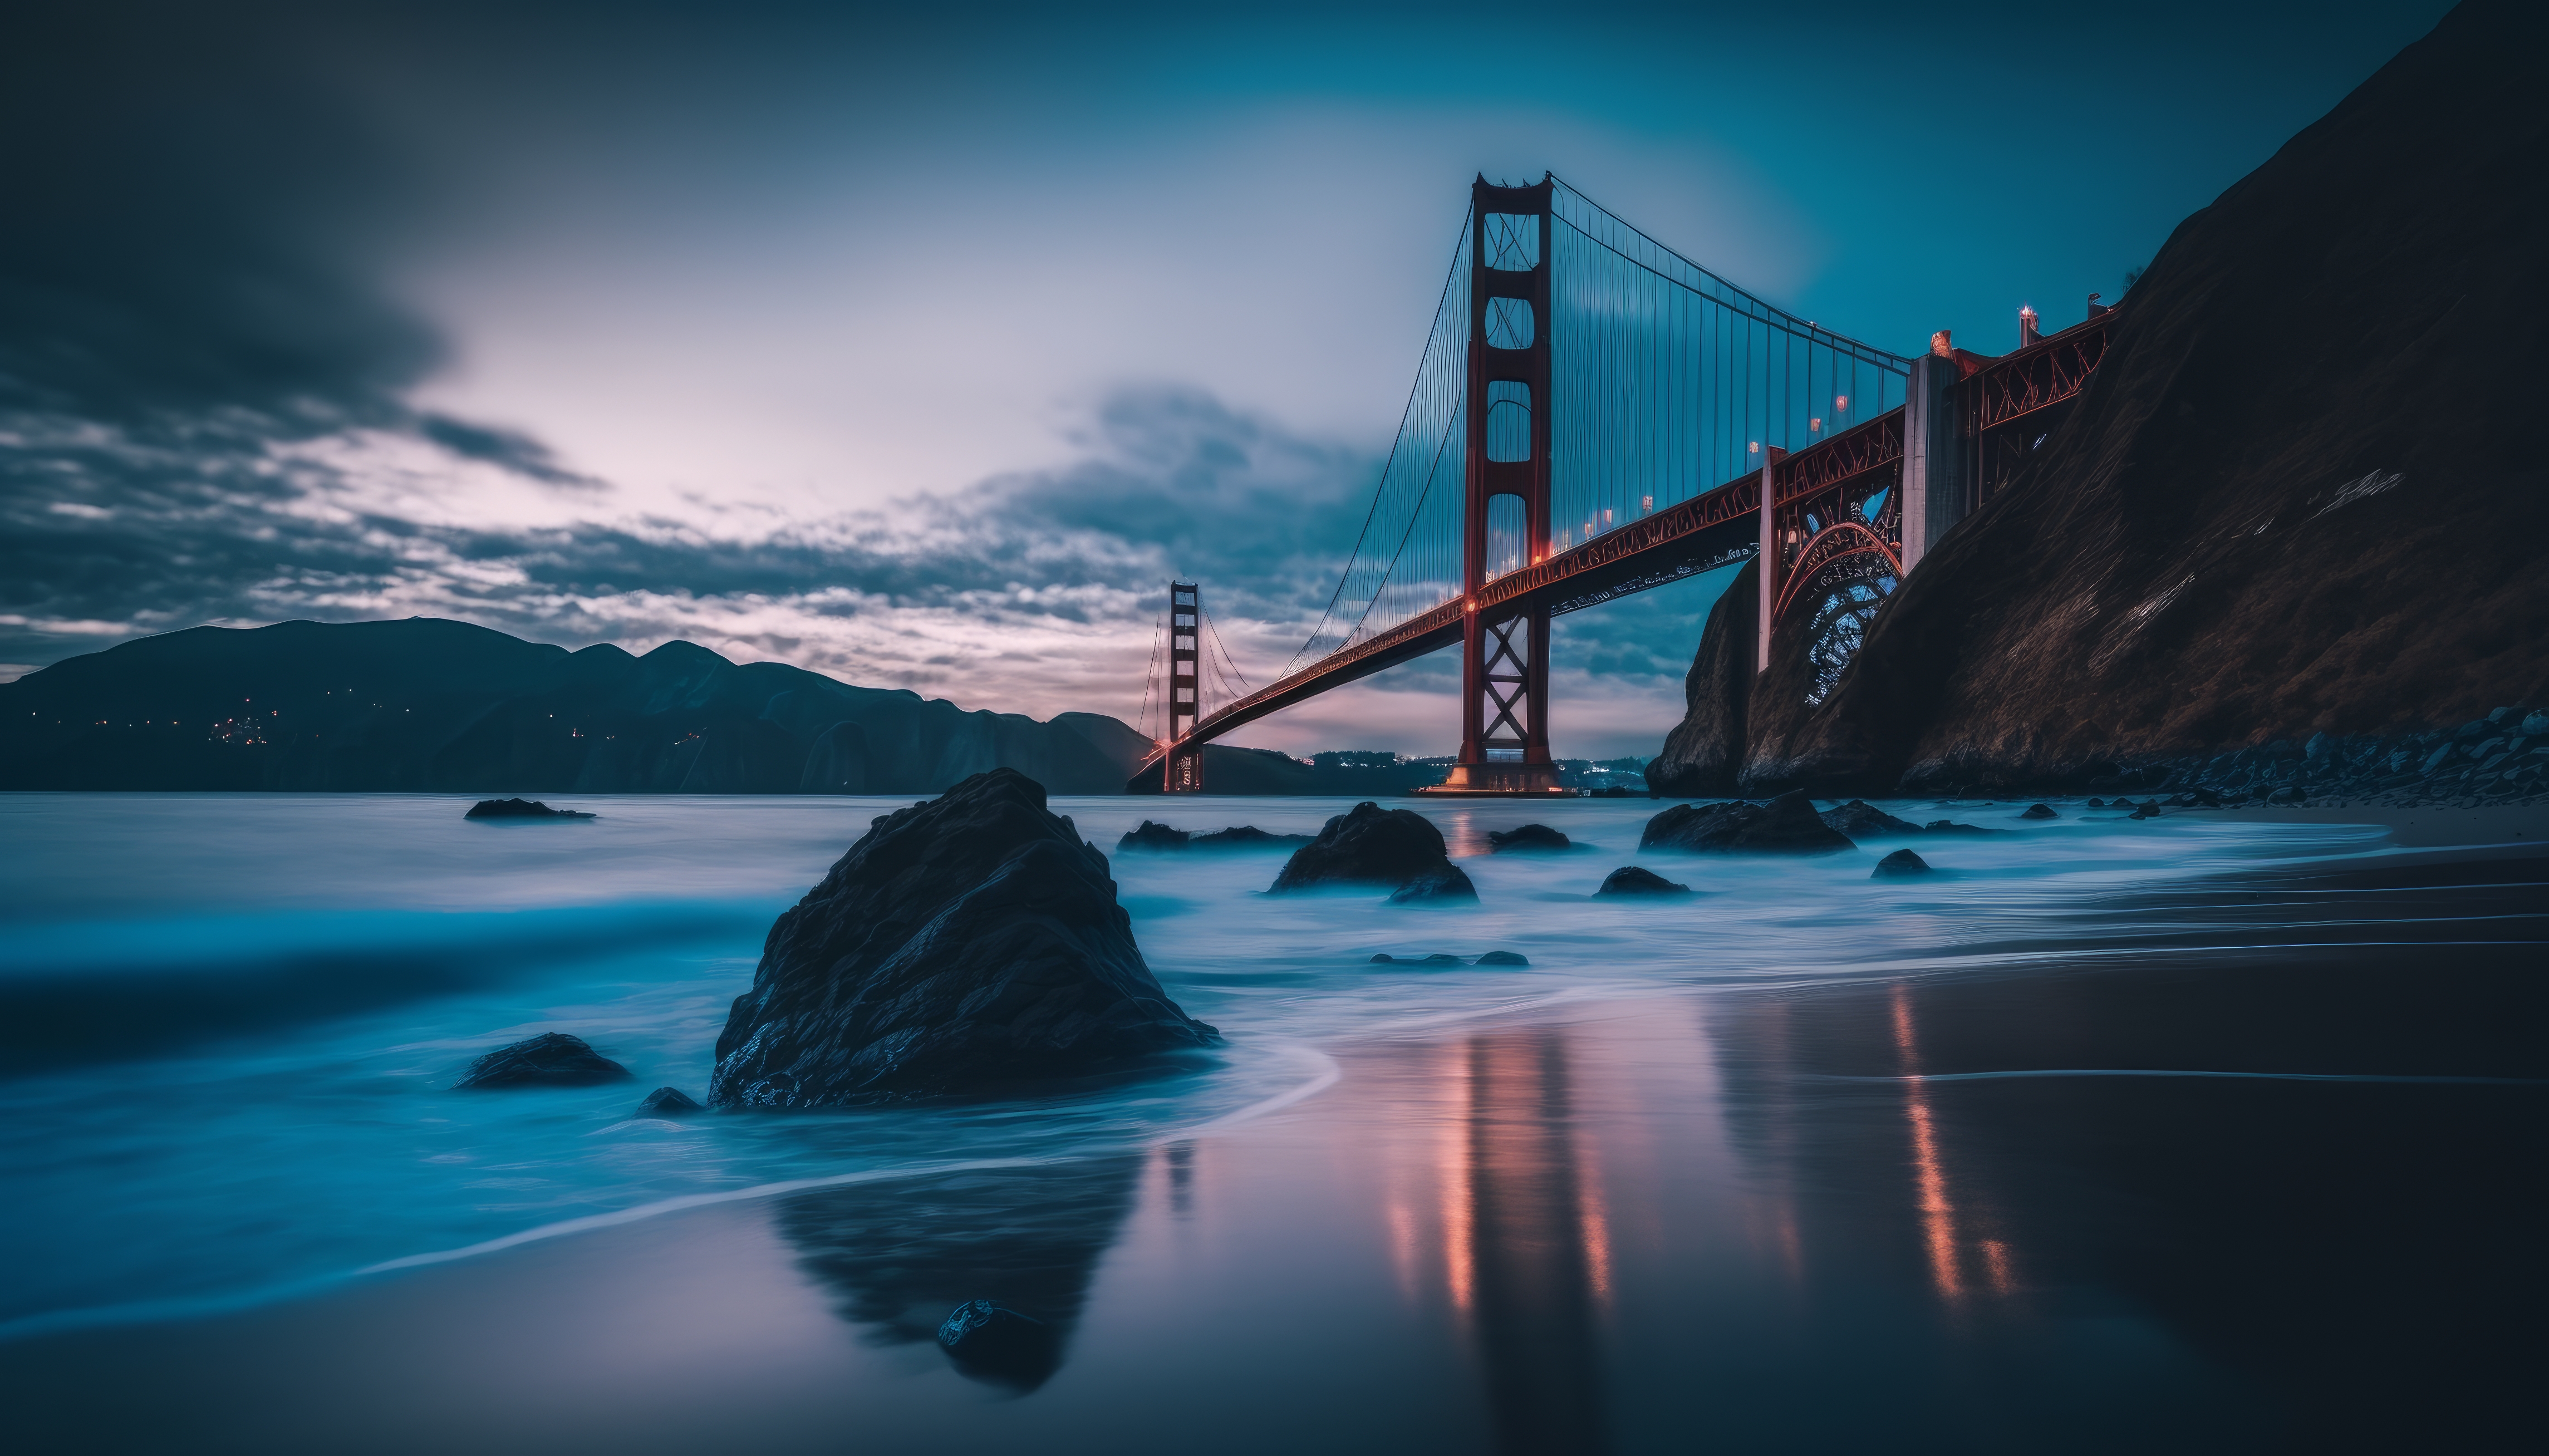 General 4579x2616 AI art Golden Gate Bridge Blue hour bridge water rocks reflection sky clouds waves